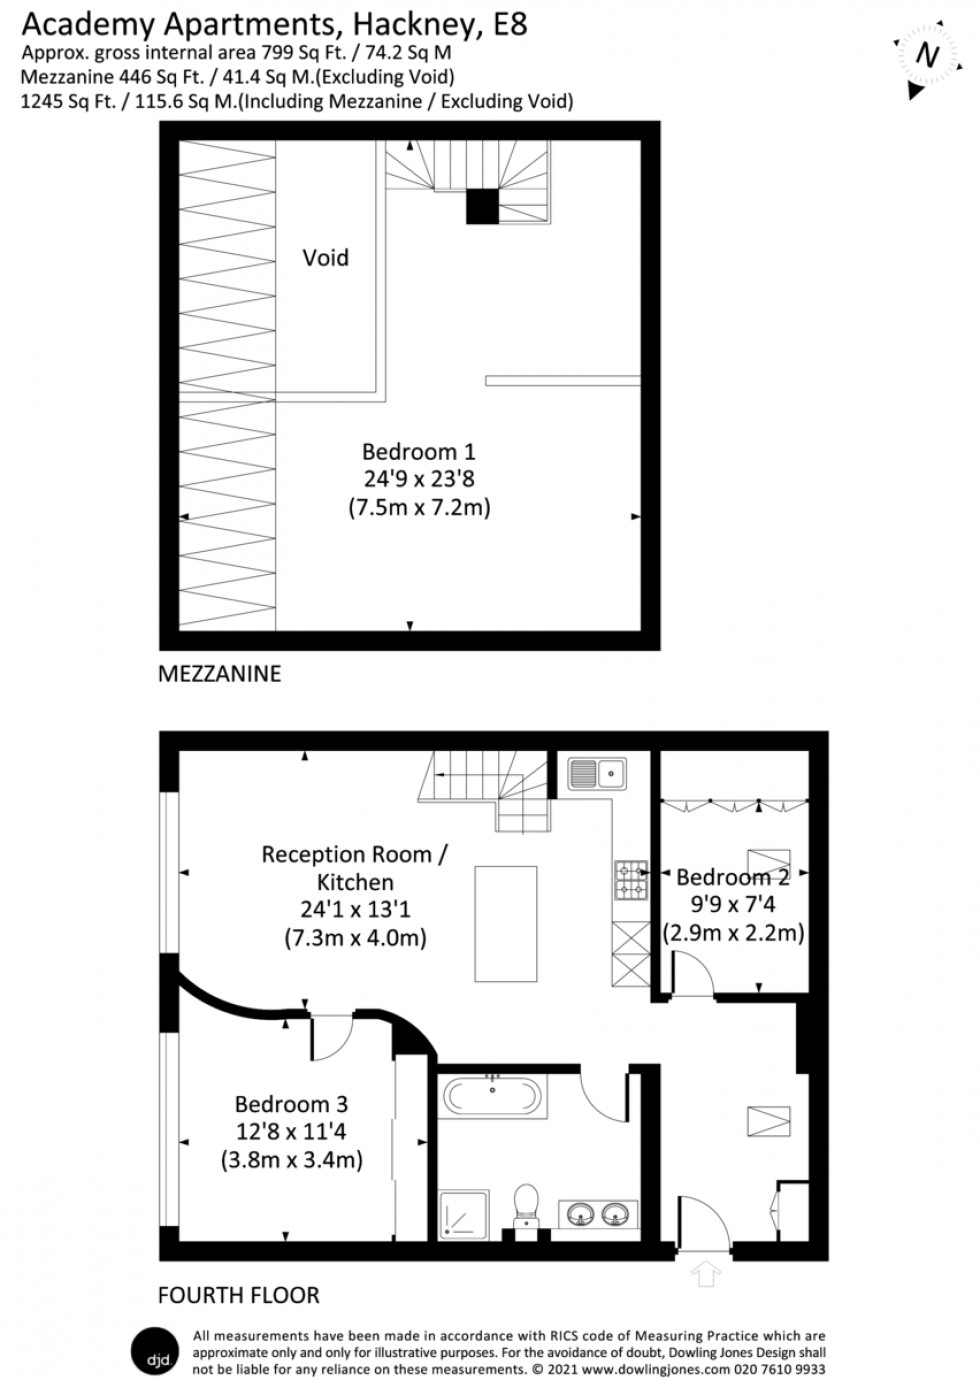 Floorplan for Academy Apartments